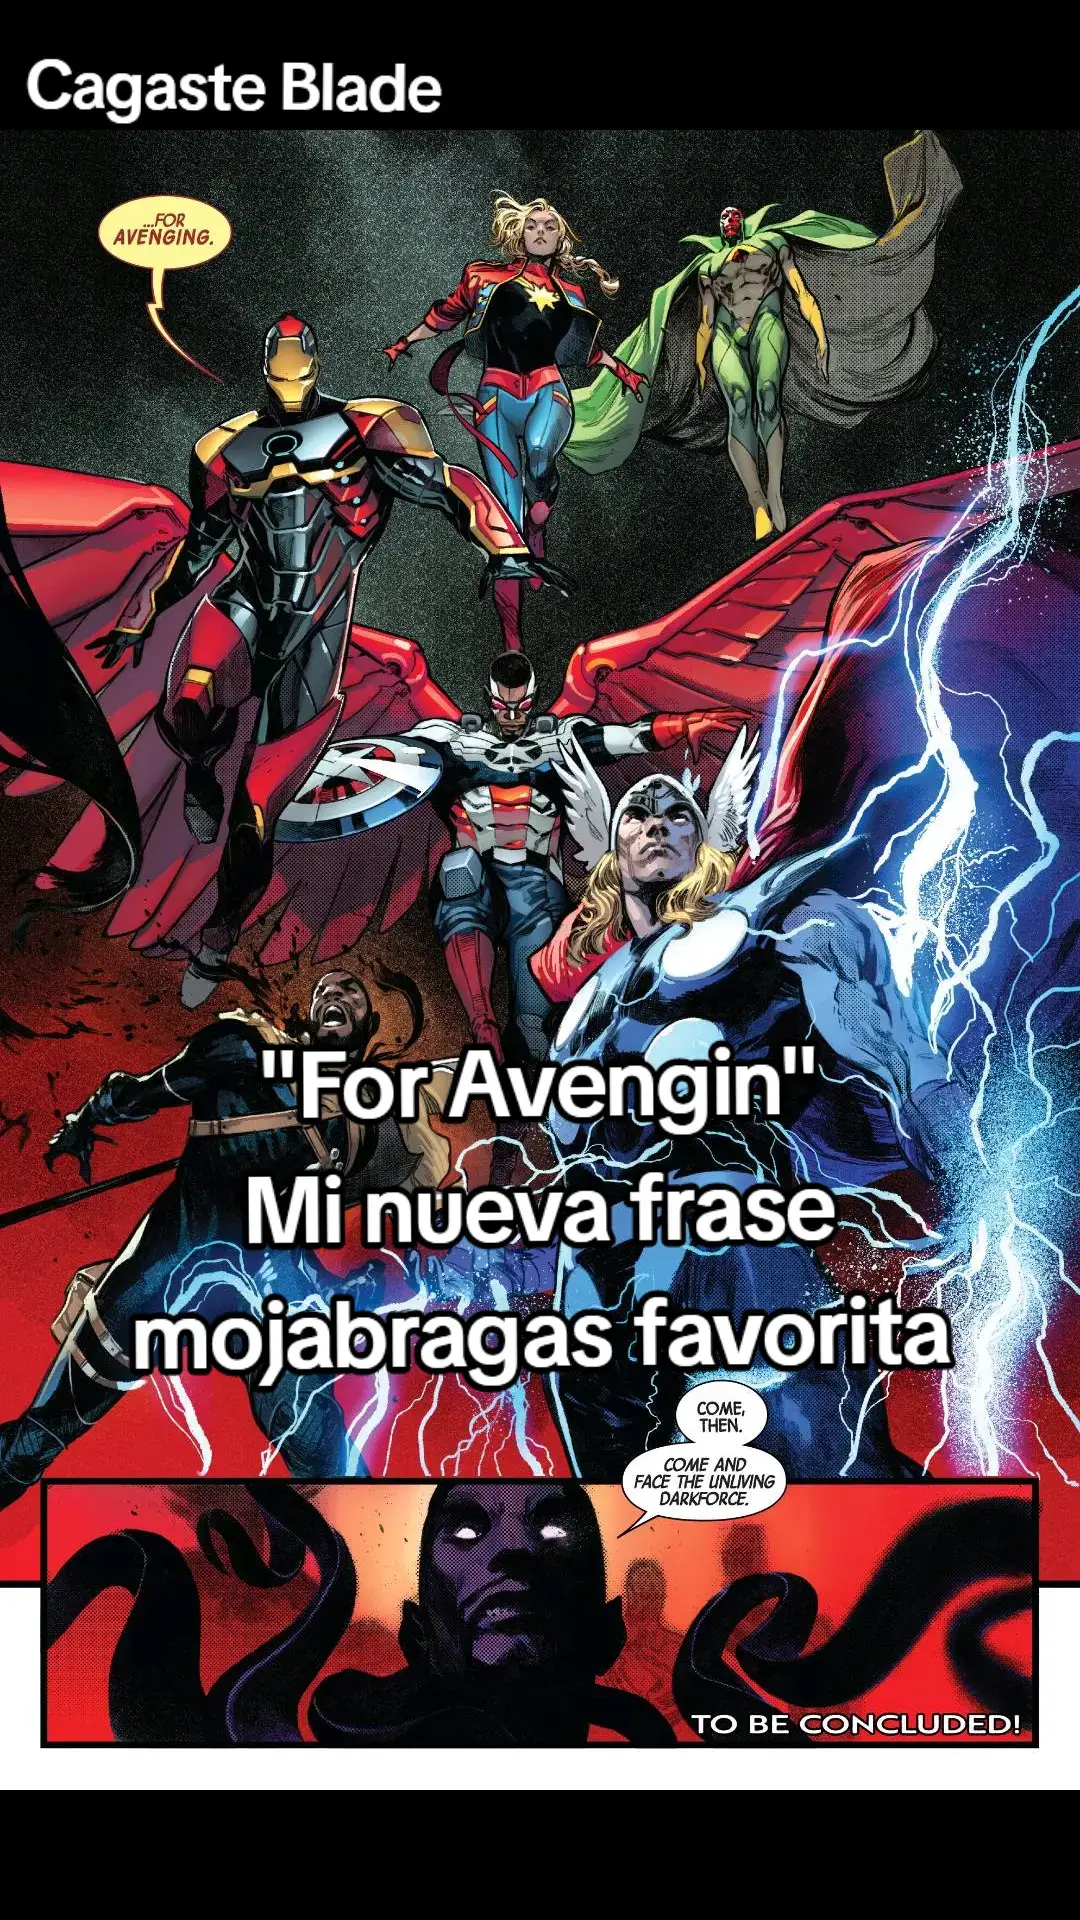 #theavengers #avengers #losvengadores #thor #ironman #blade #hulk #captainamerica  #spiderman #kraven #elhombrearaña #historieta #peterparker #fusion #lagarto #spiderman2099 #venom #trex  #comic #marvel #tiktok #parati